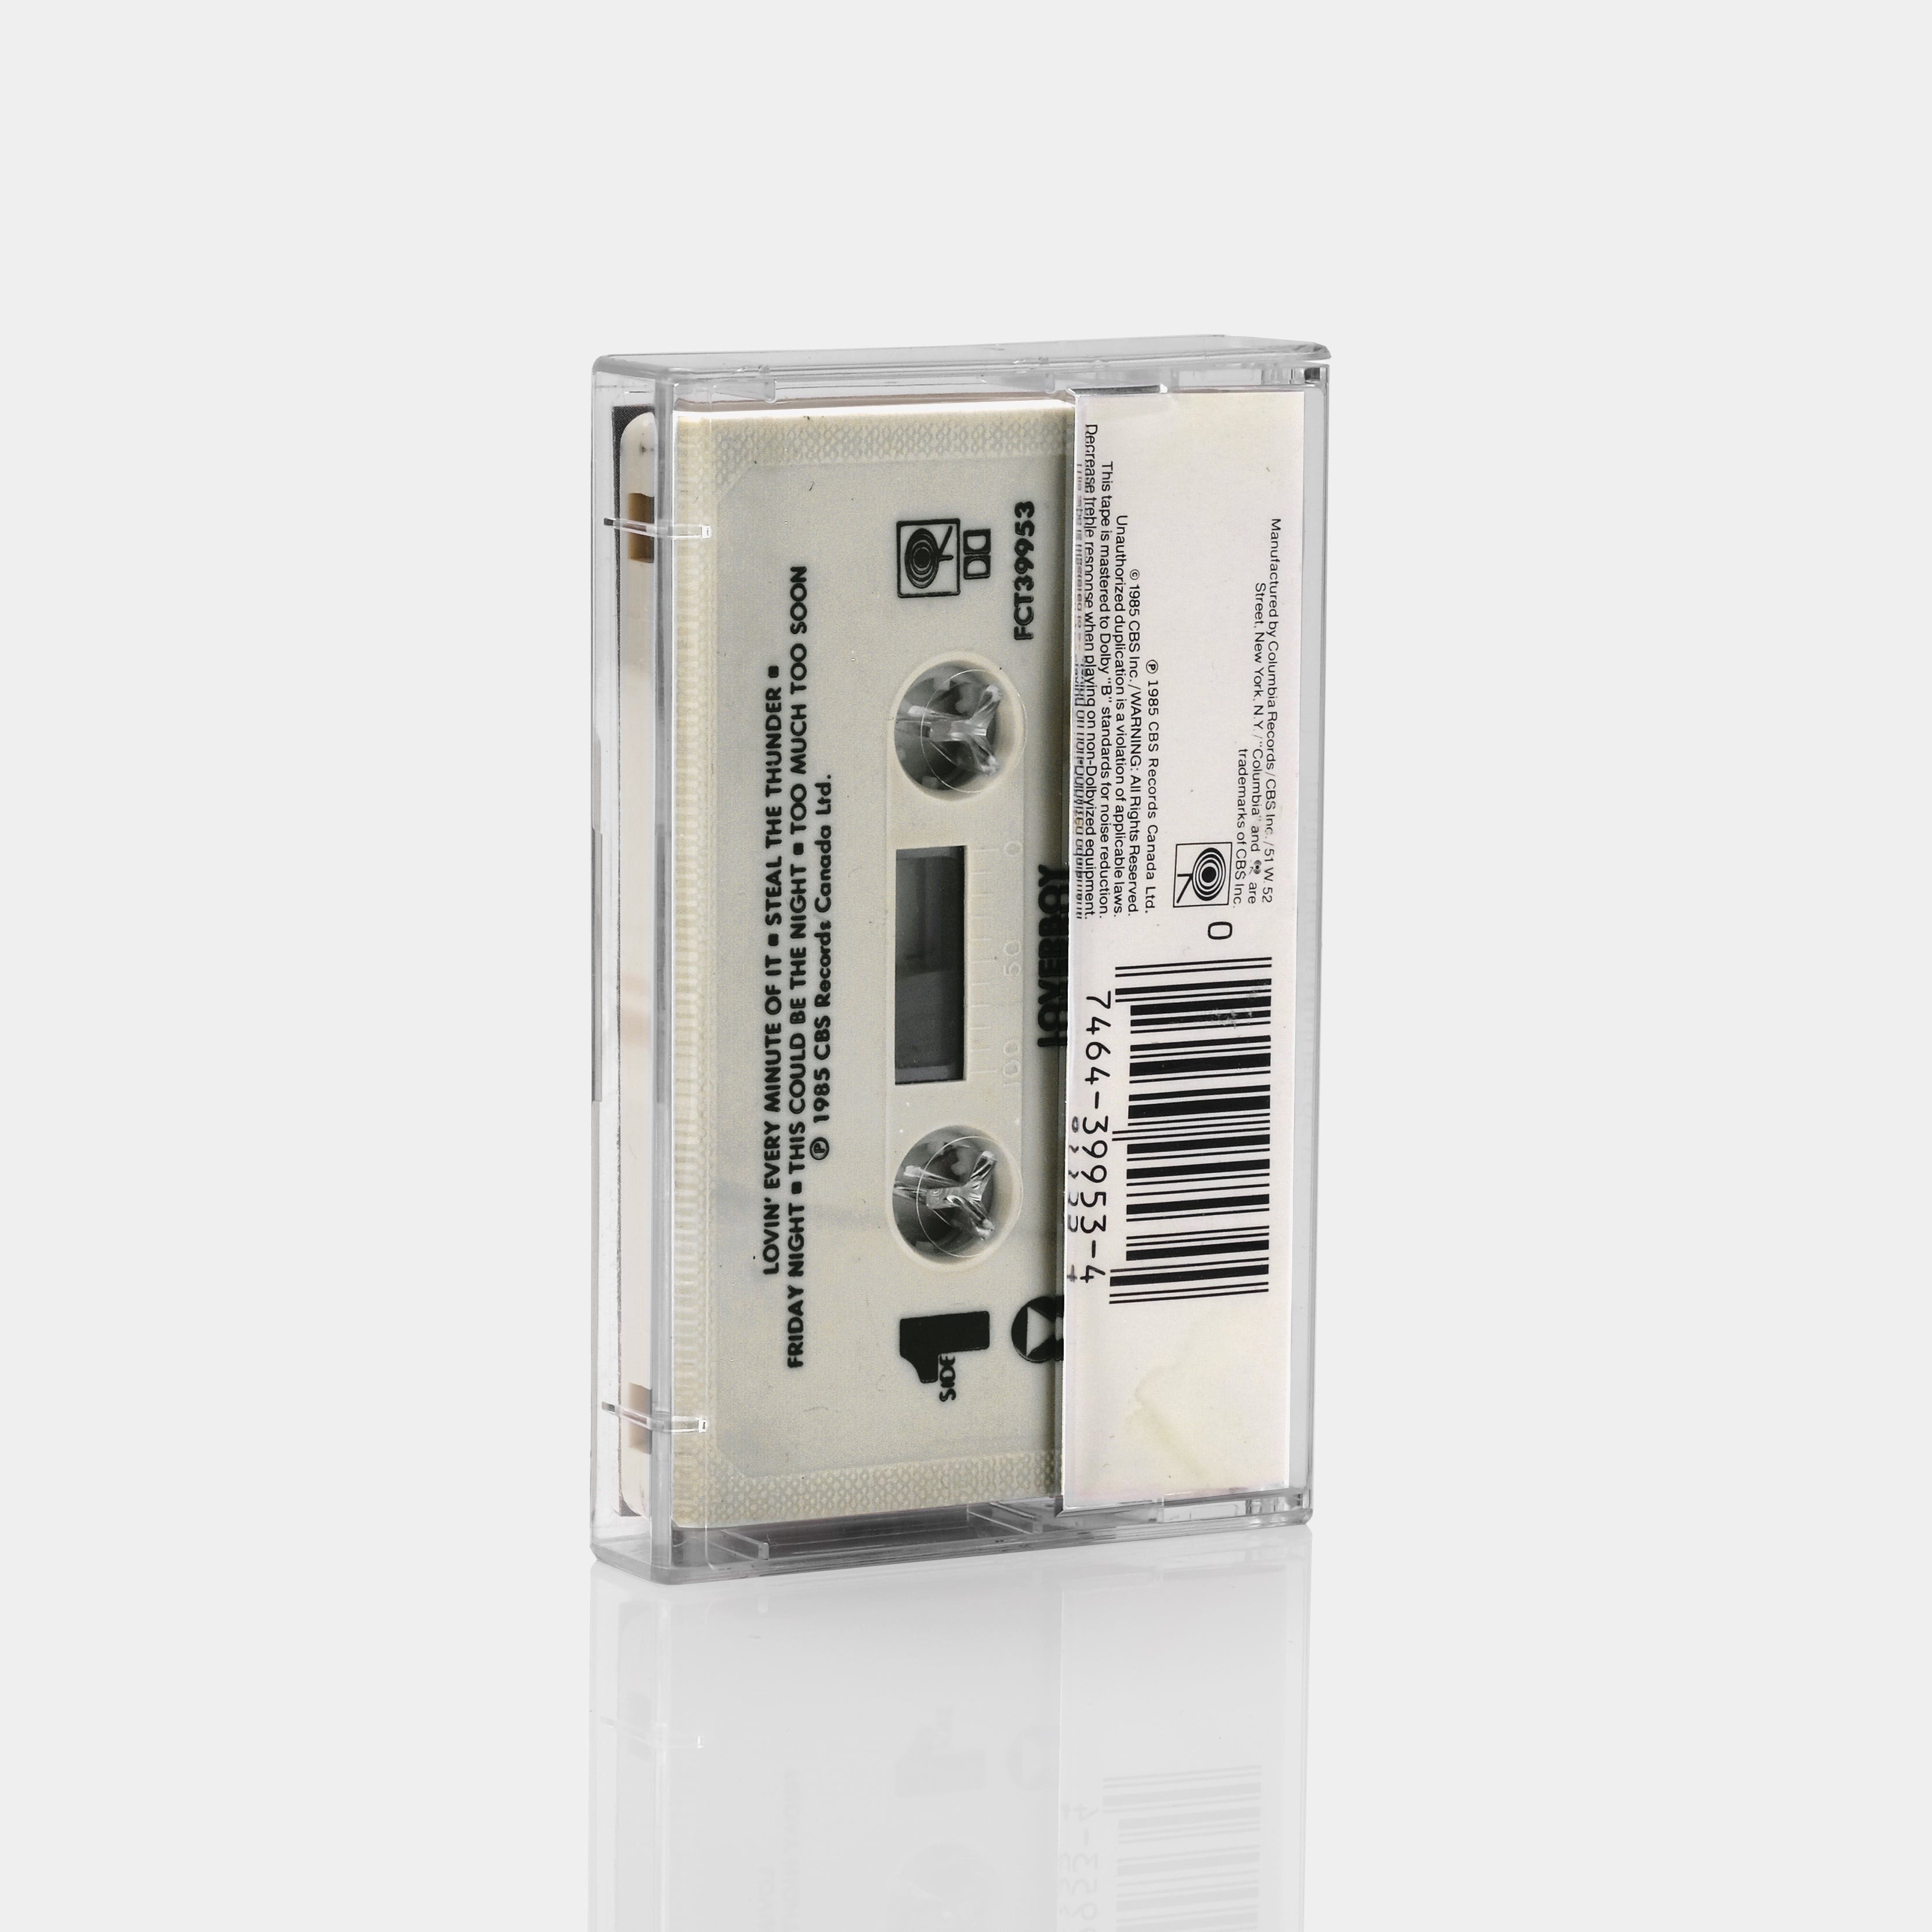 Loverboy - Lovin' Every Minute Of It Cassette Tape